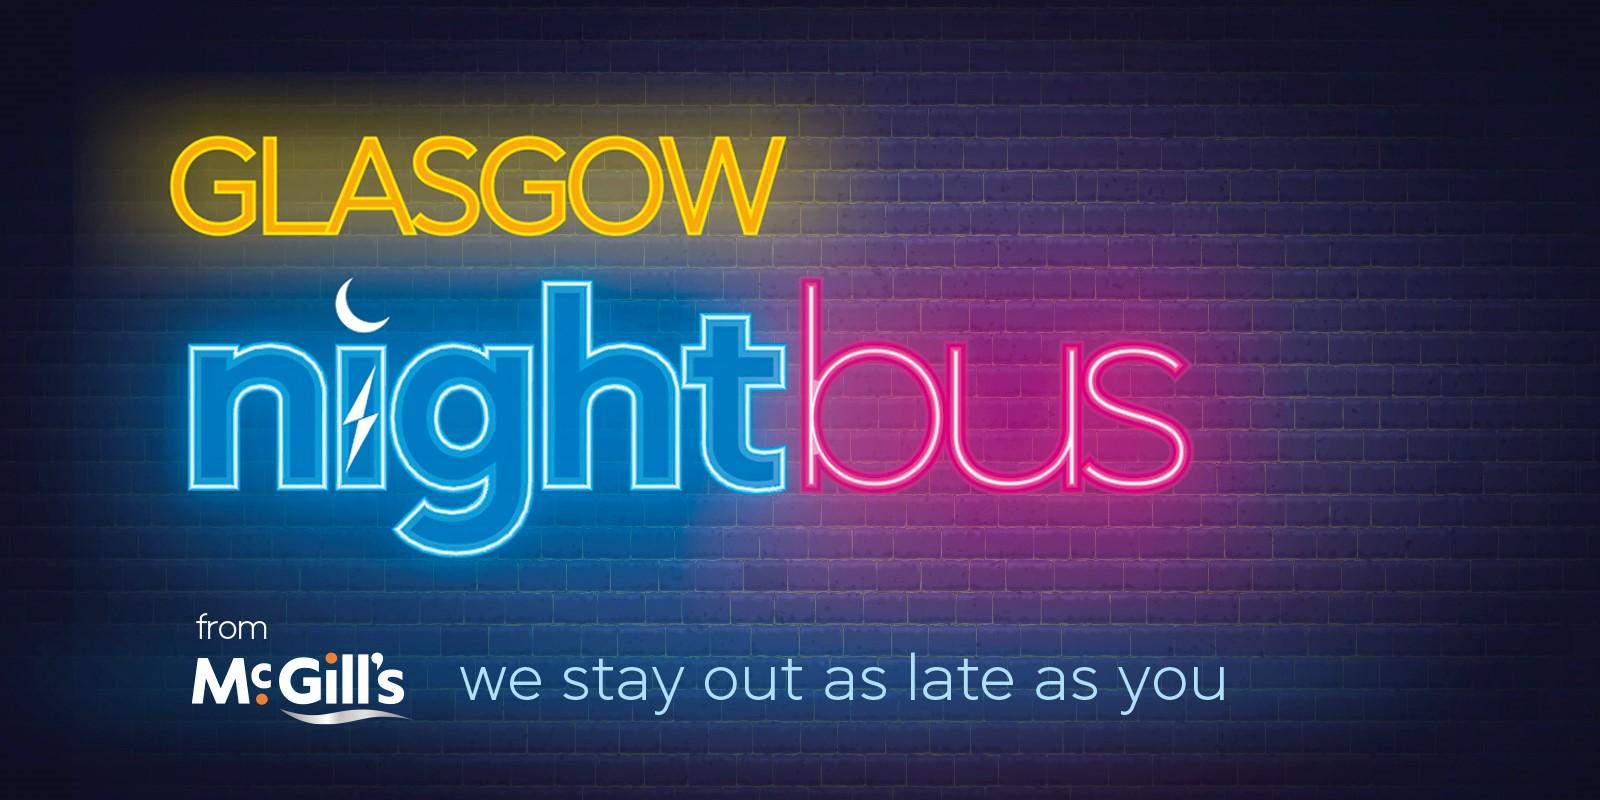 New Glasgow Nightbus service